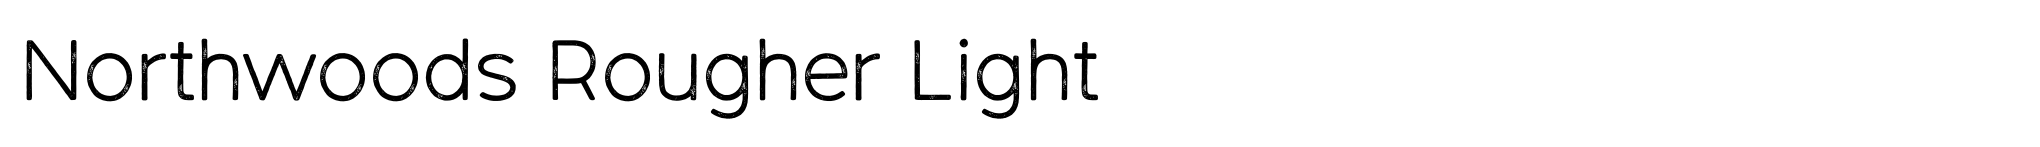 Northwoods Rougher Light image